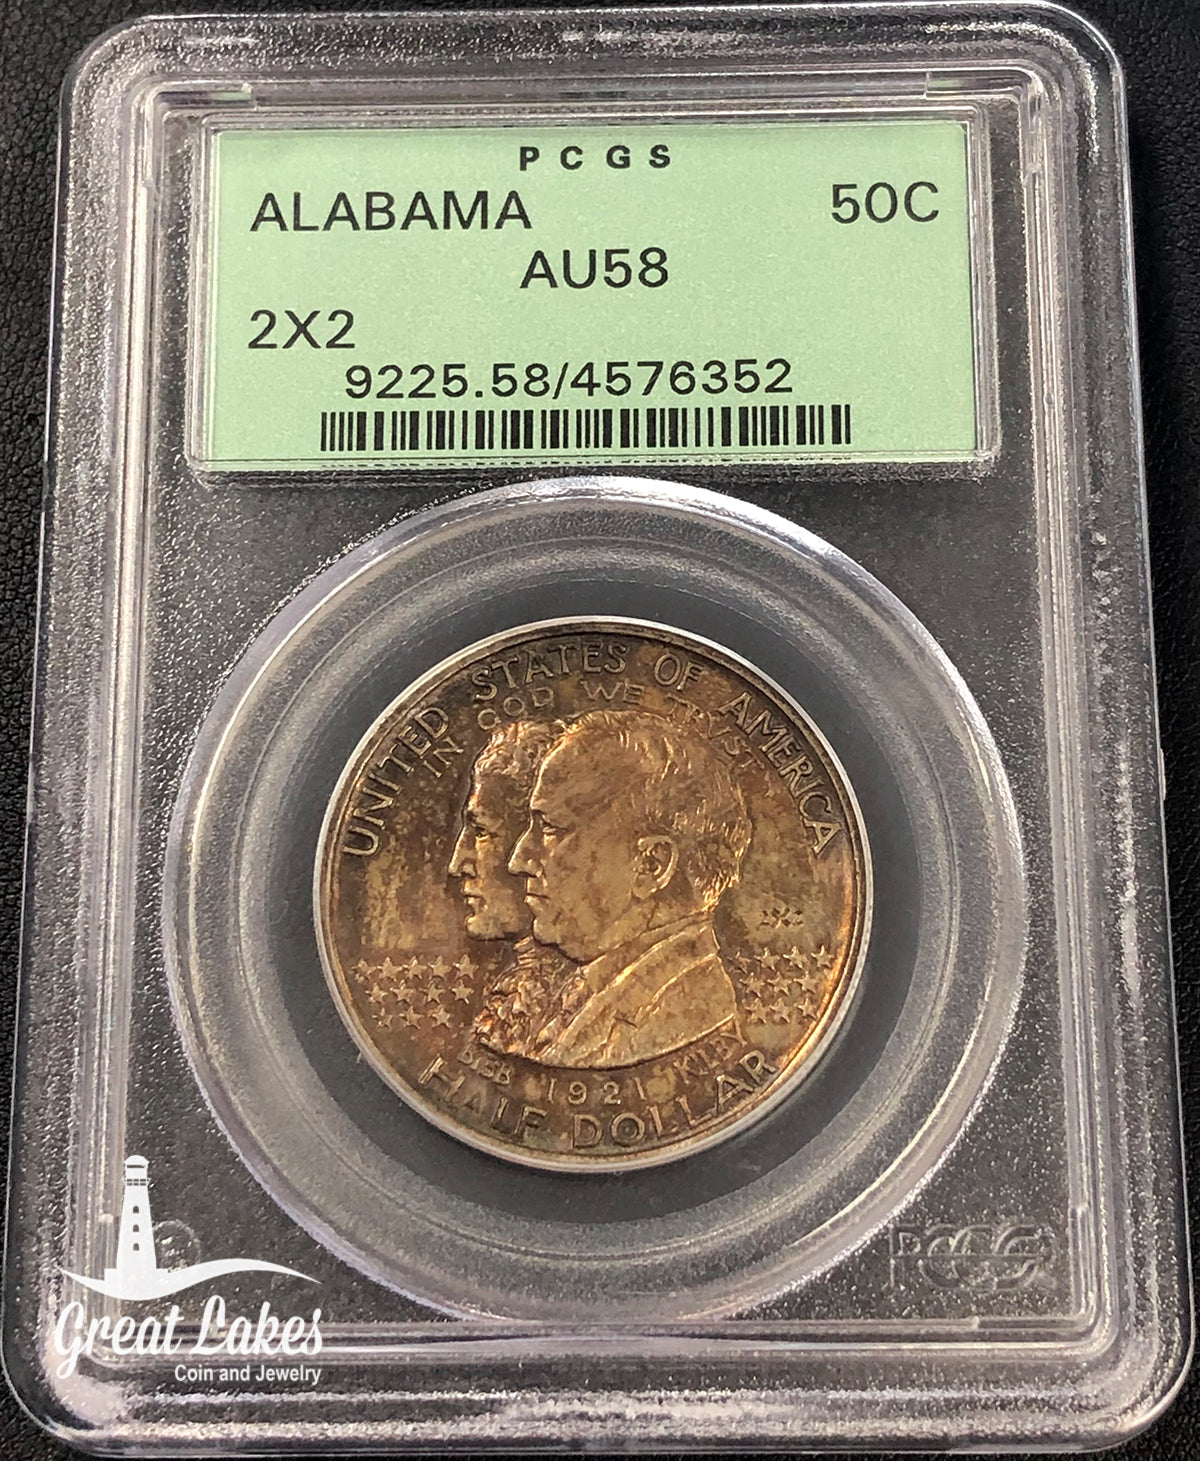 1921 Alabama 2x2 Classic Commemorative PCGS AU58